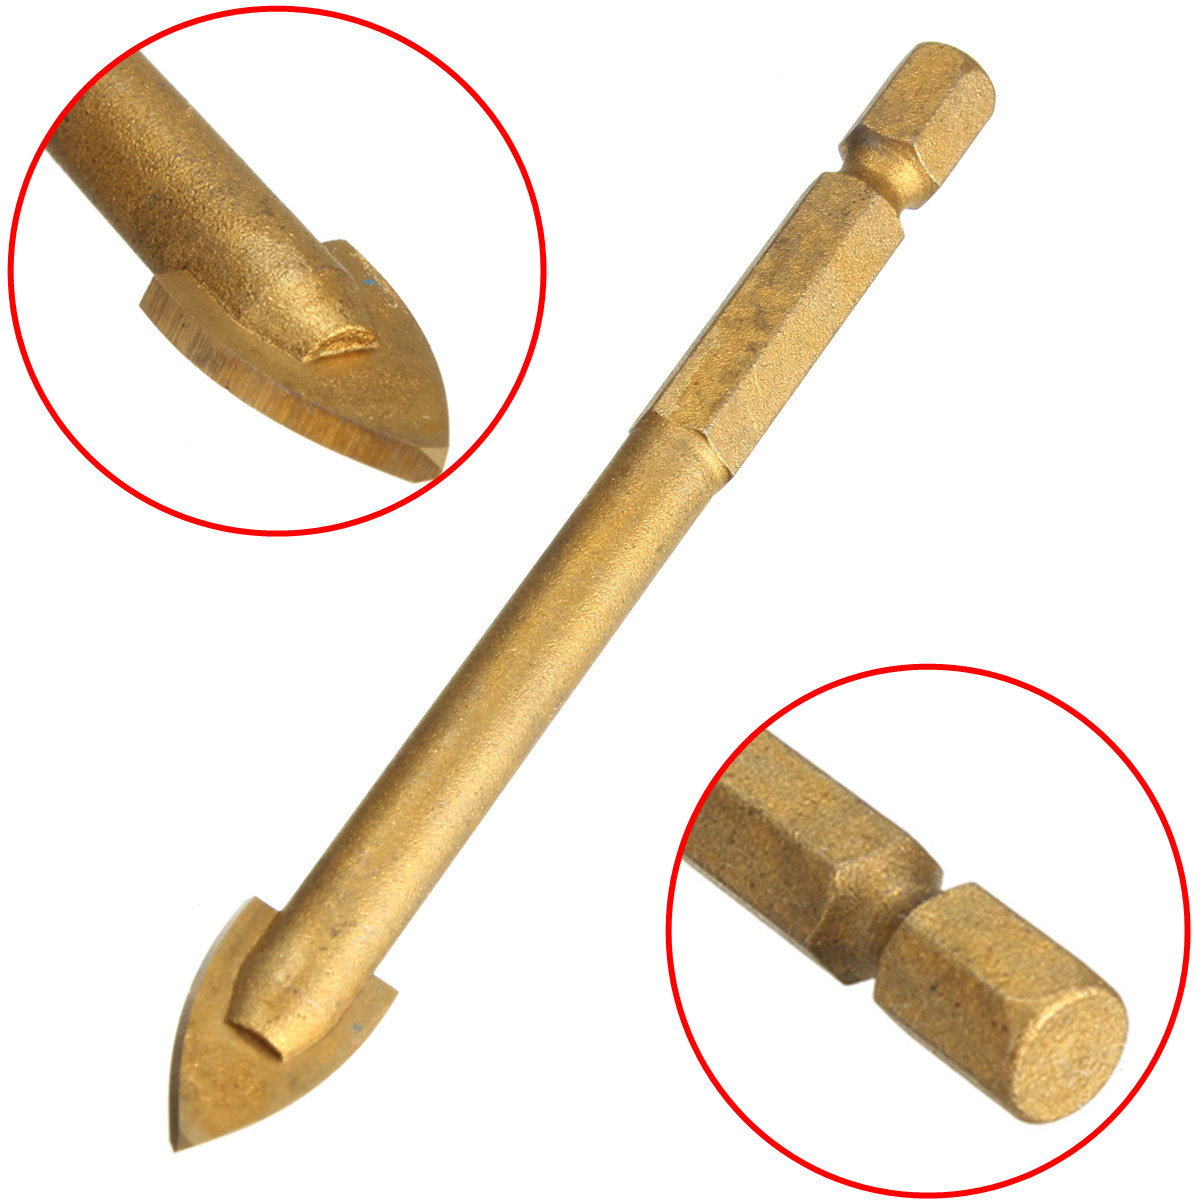 6-12mm-Carbide-Tile-Spear-Head-Drill-Bit-Glass-Drill-Hole-Tool-Tungsten-Carbide-Tipped-Bit-978952-7